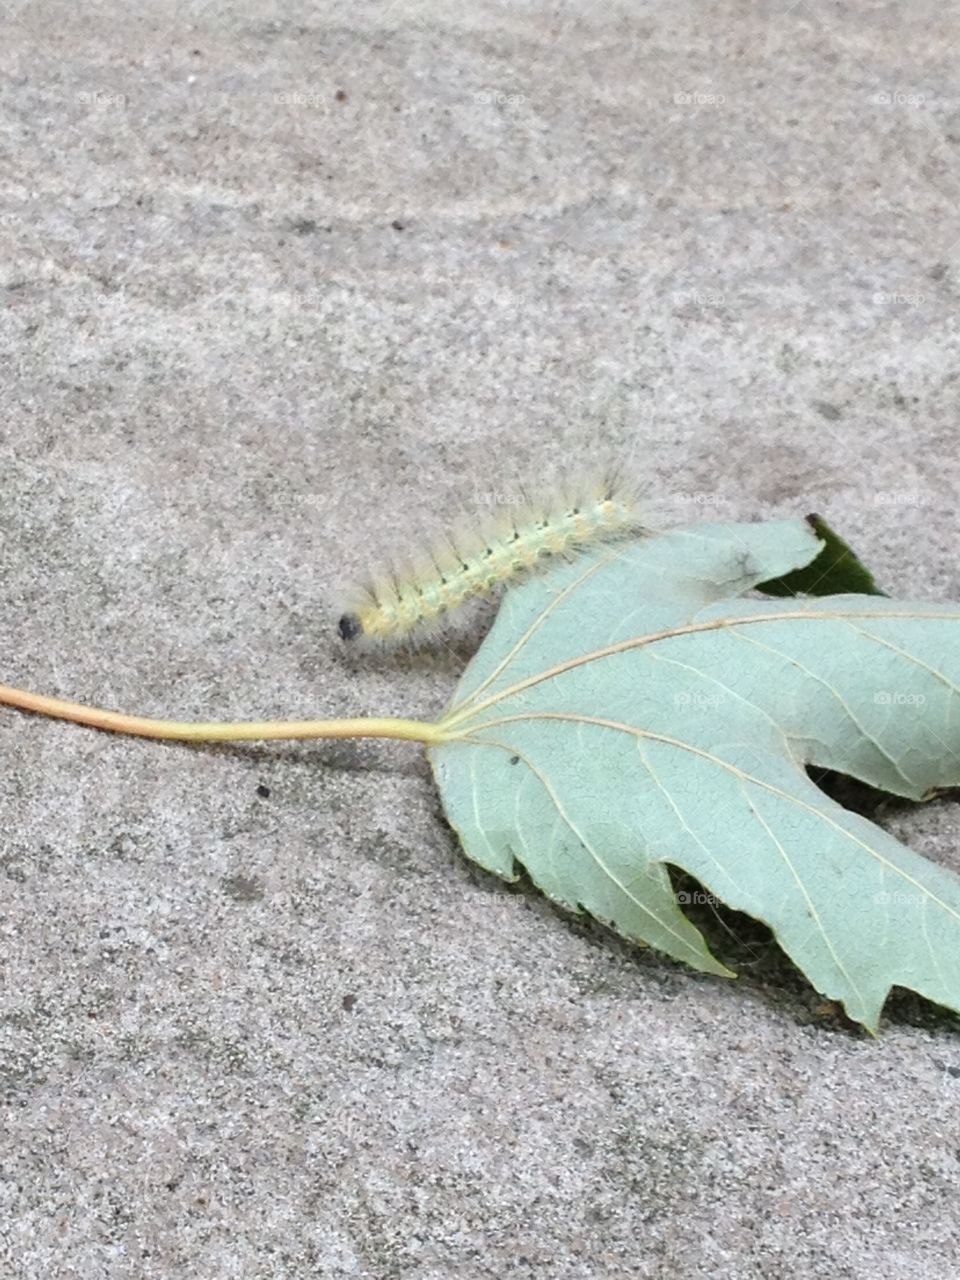 Caterpillar crawls off of a leaf.